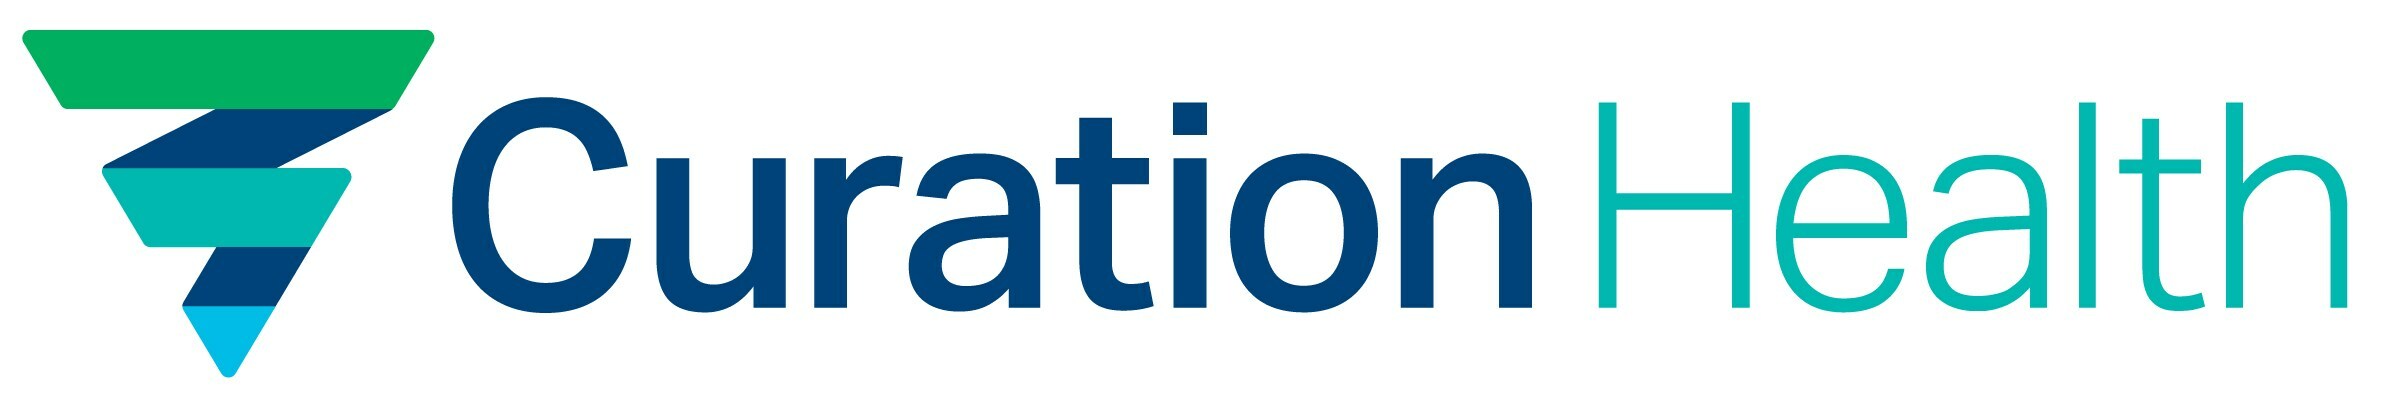 Curation Health Logo